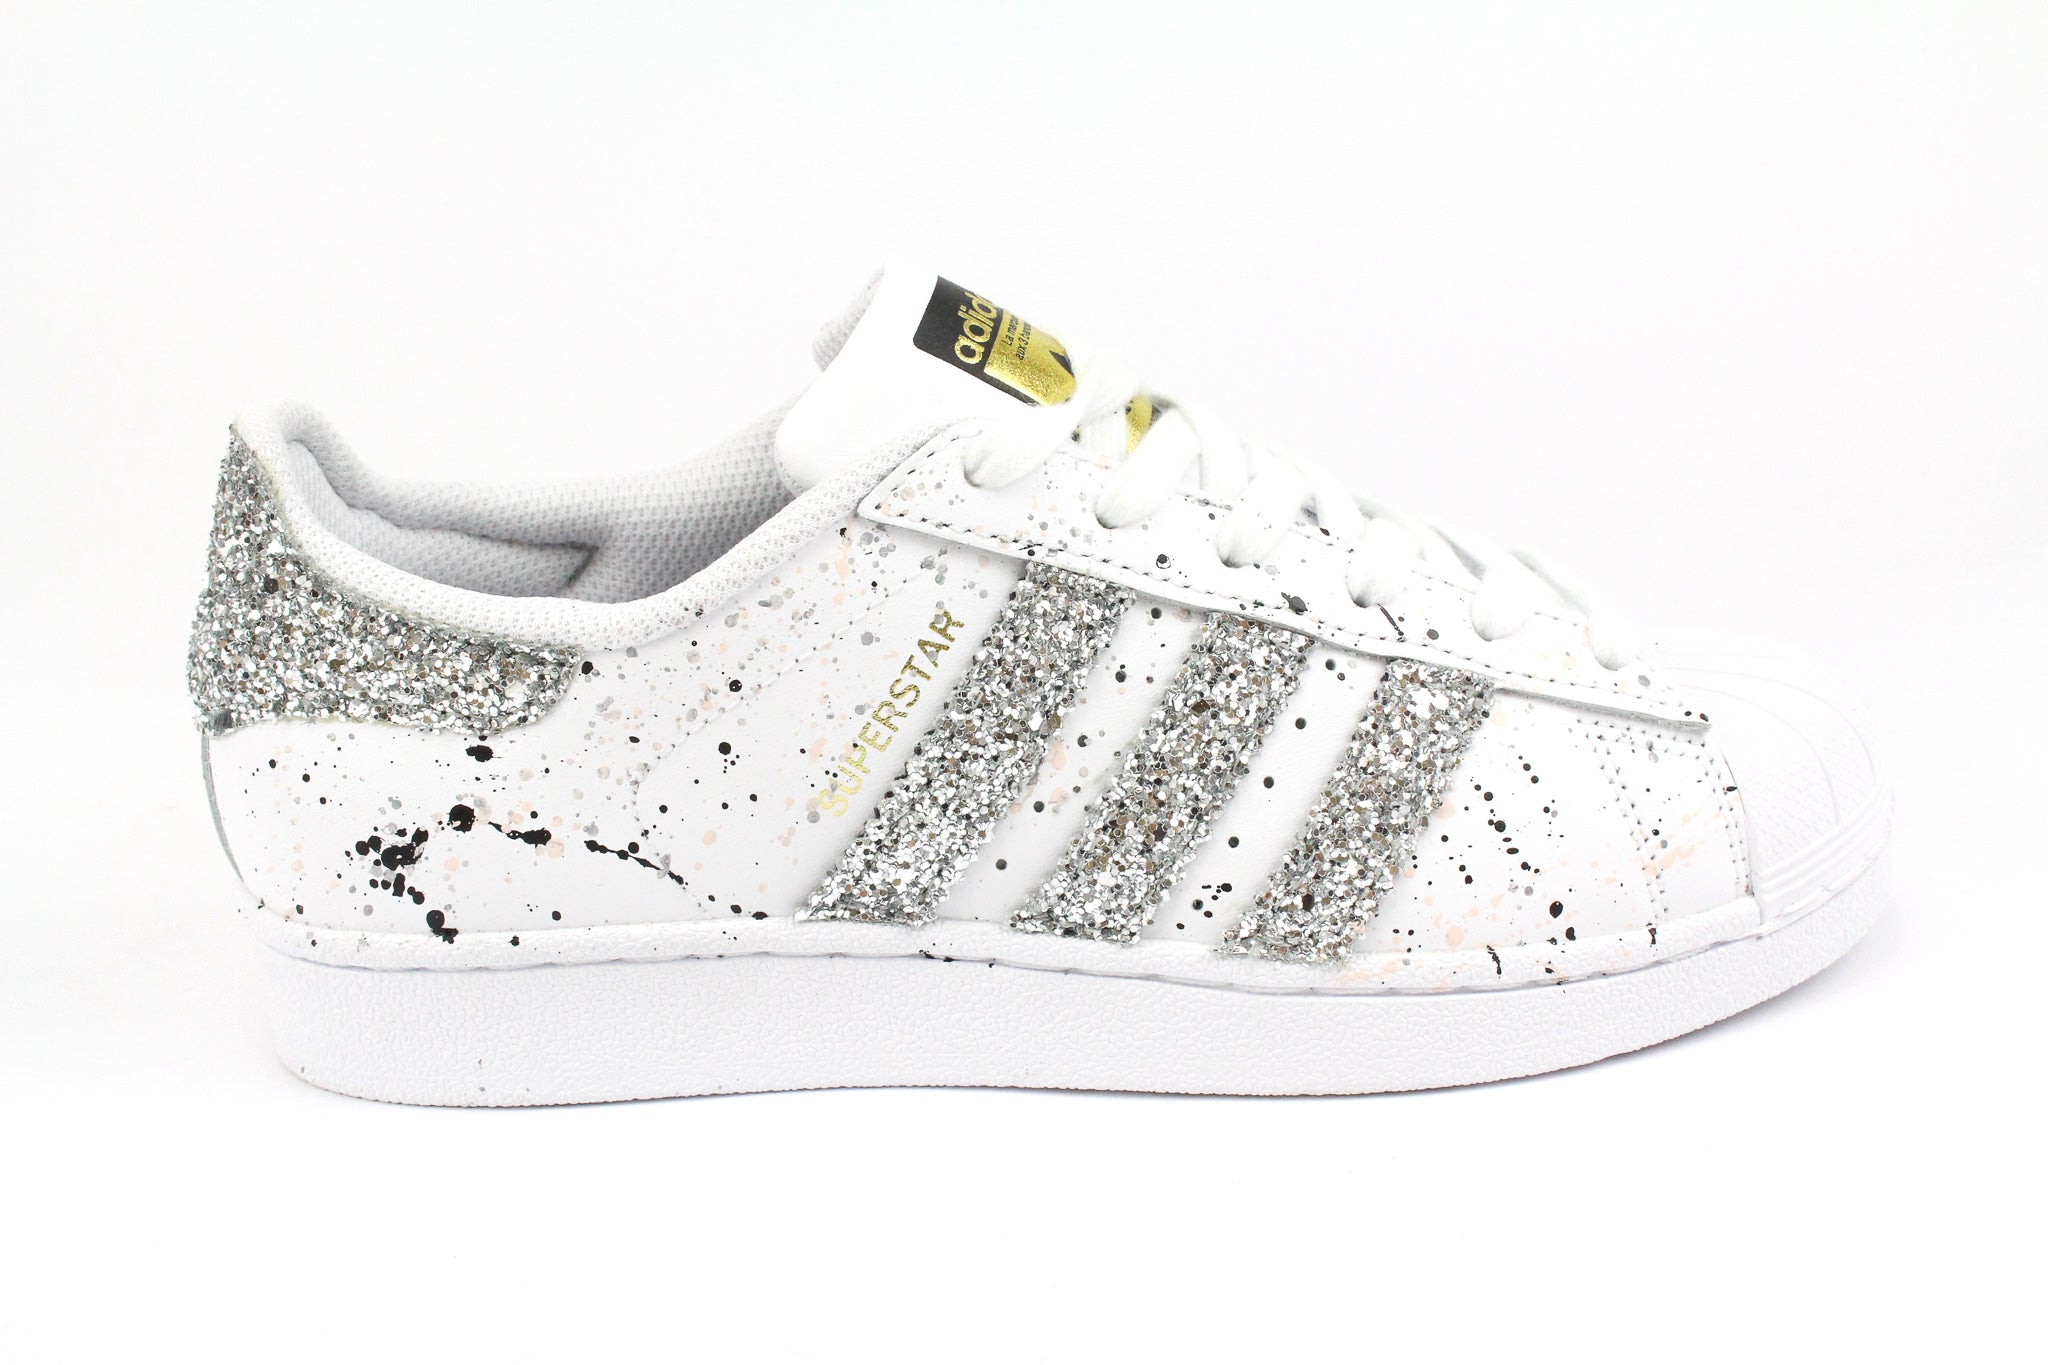 Adidas Superstar Silver Glitter & Vernice